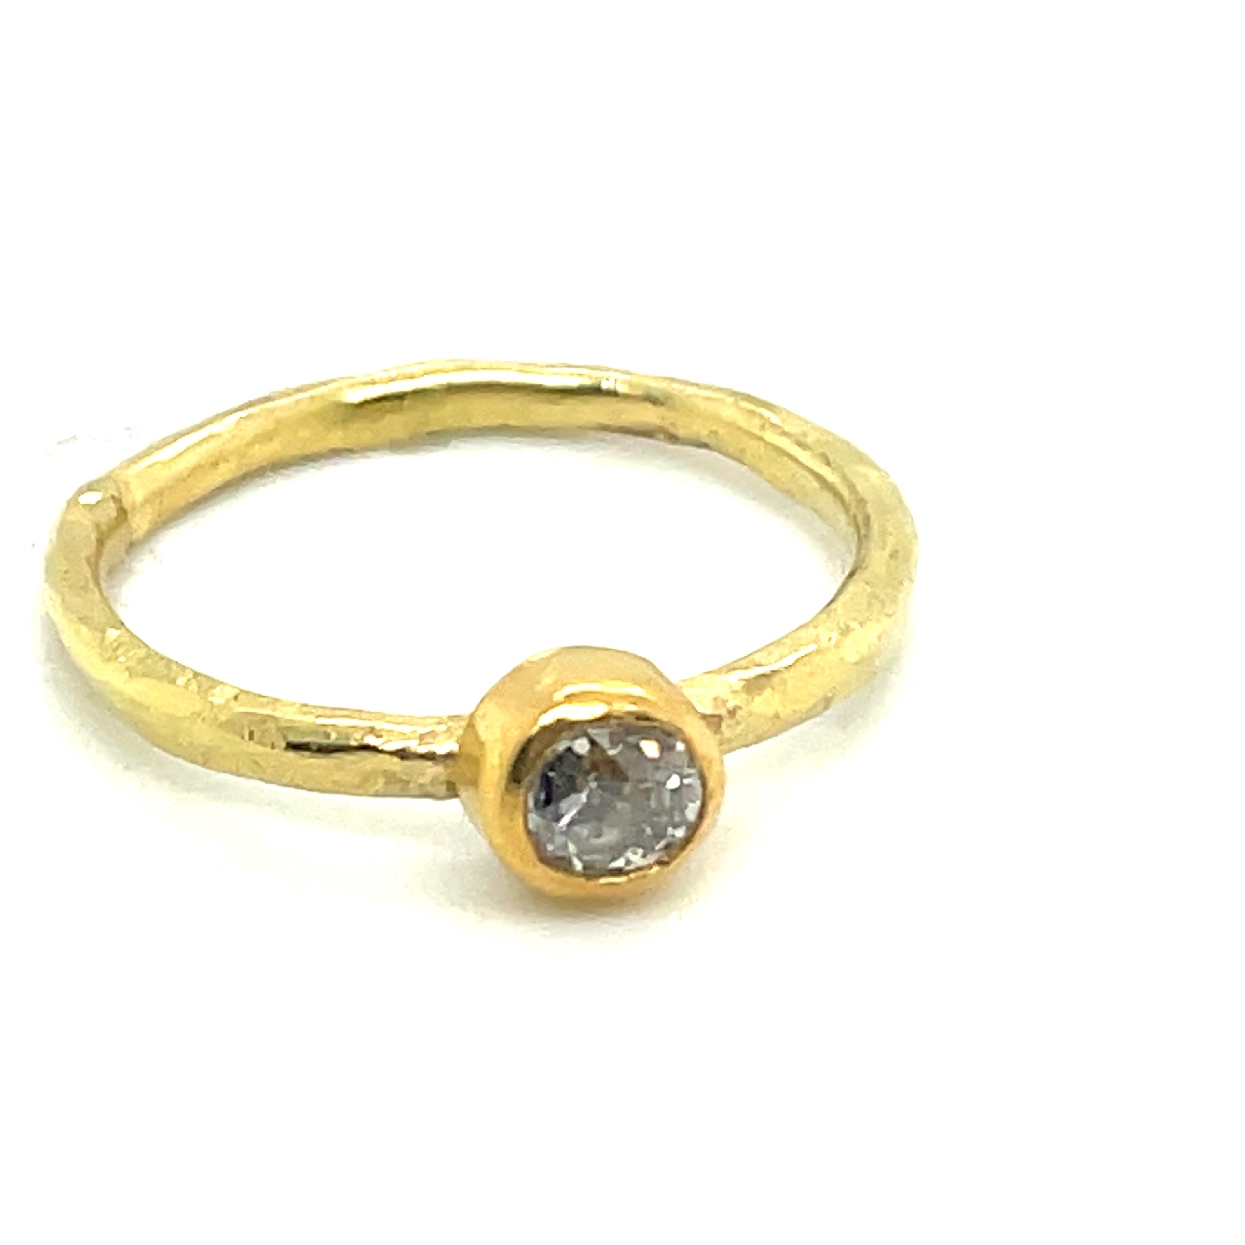 18K Yellow Gold Stacker Ring with Bezel set Diamond

Size 8